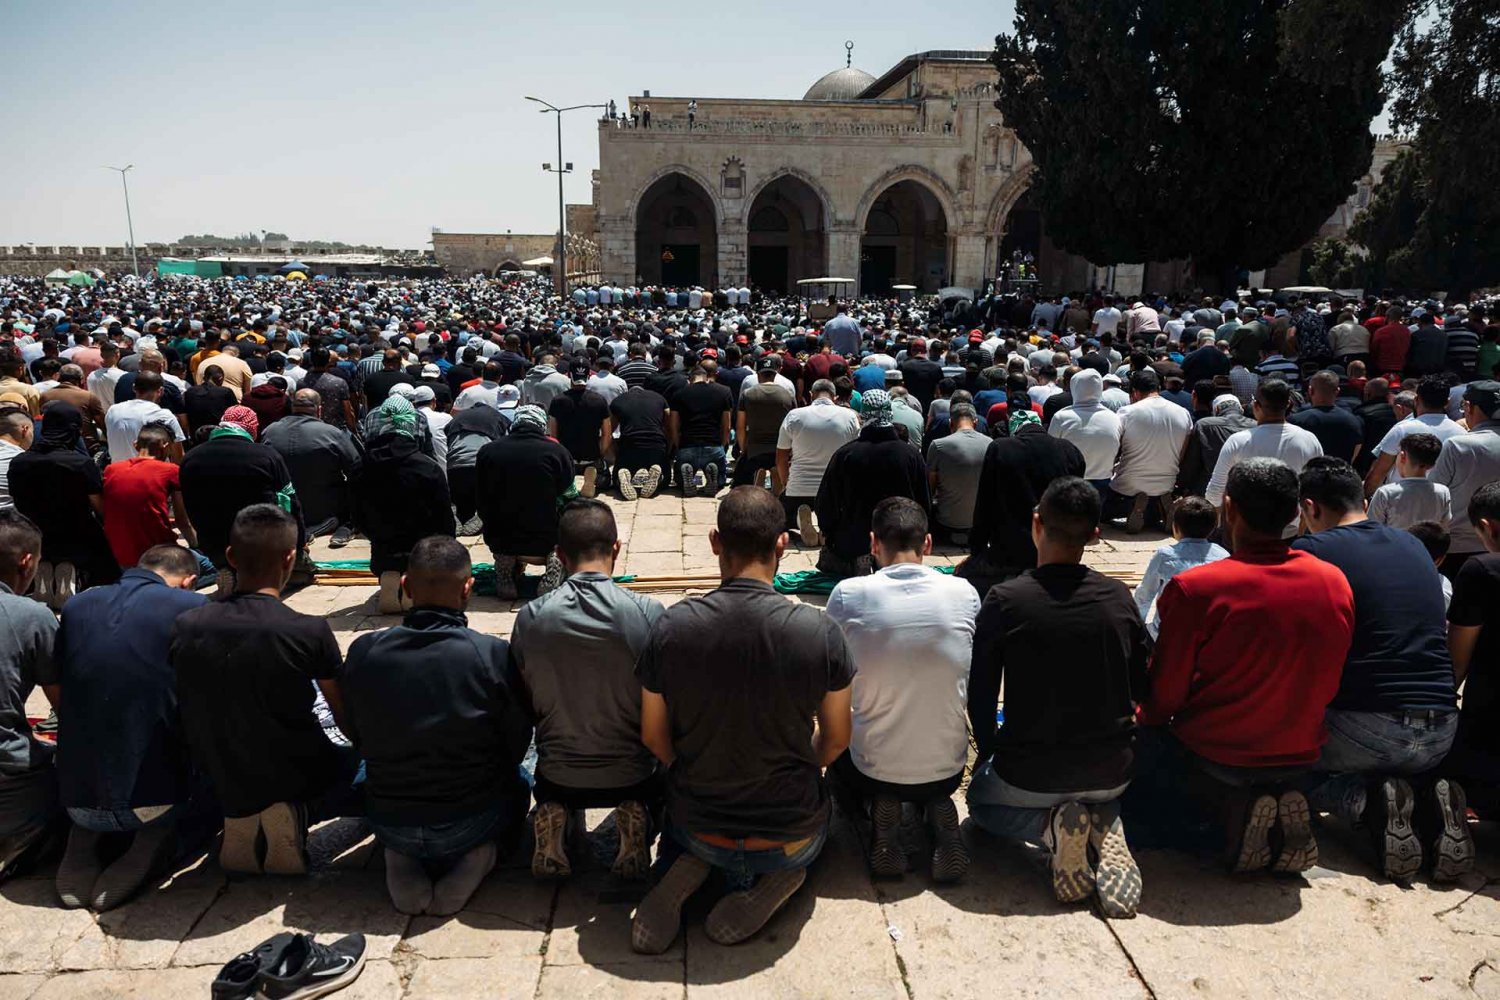 Muslim men pray in the Haram al-Sharif area during Ramadan, April 2022.